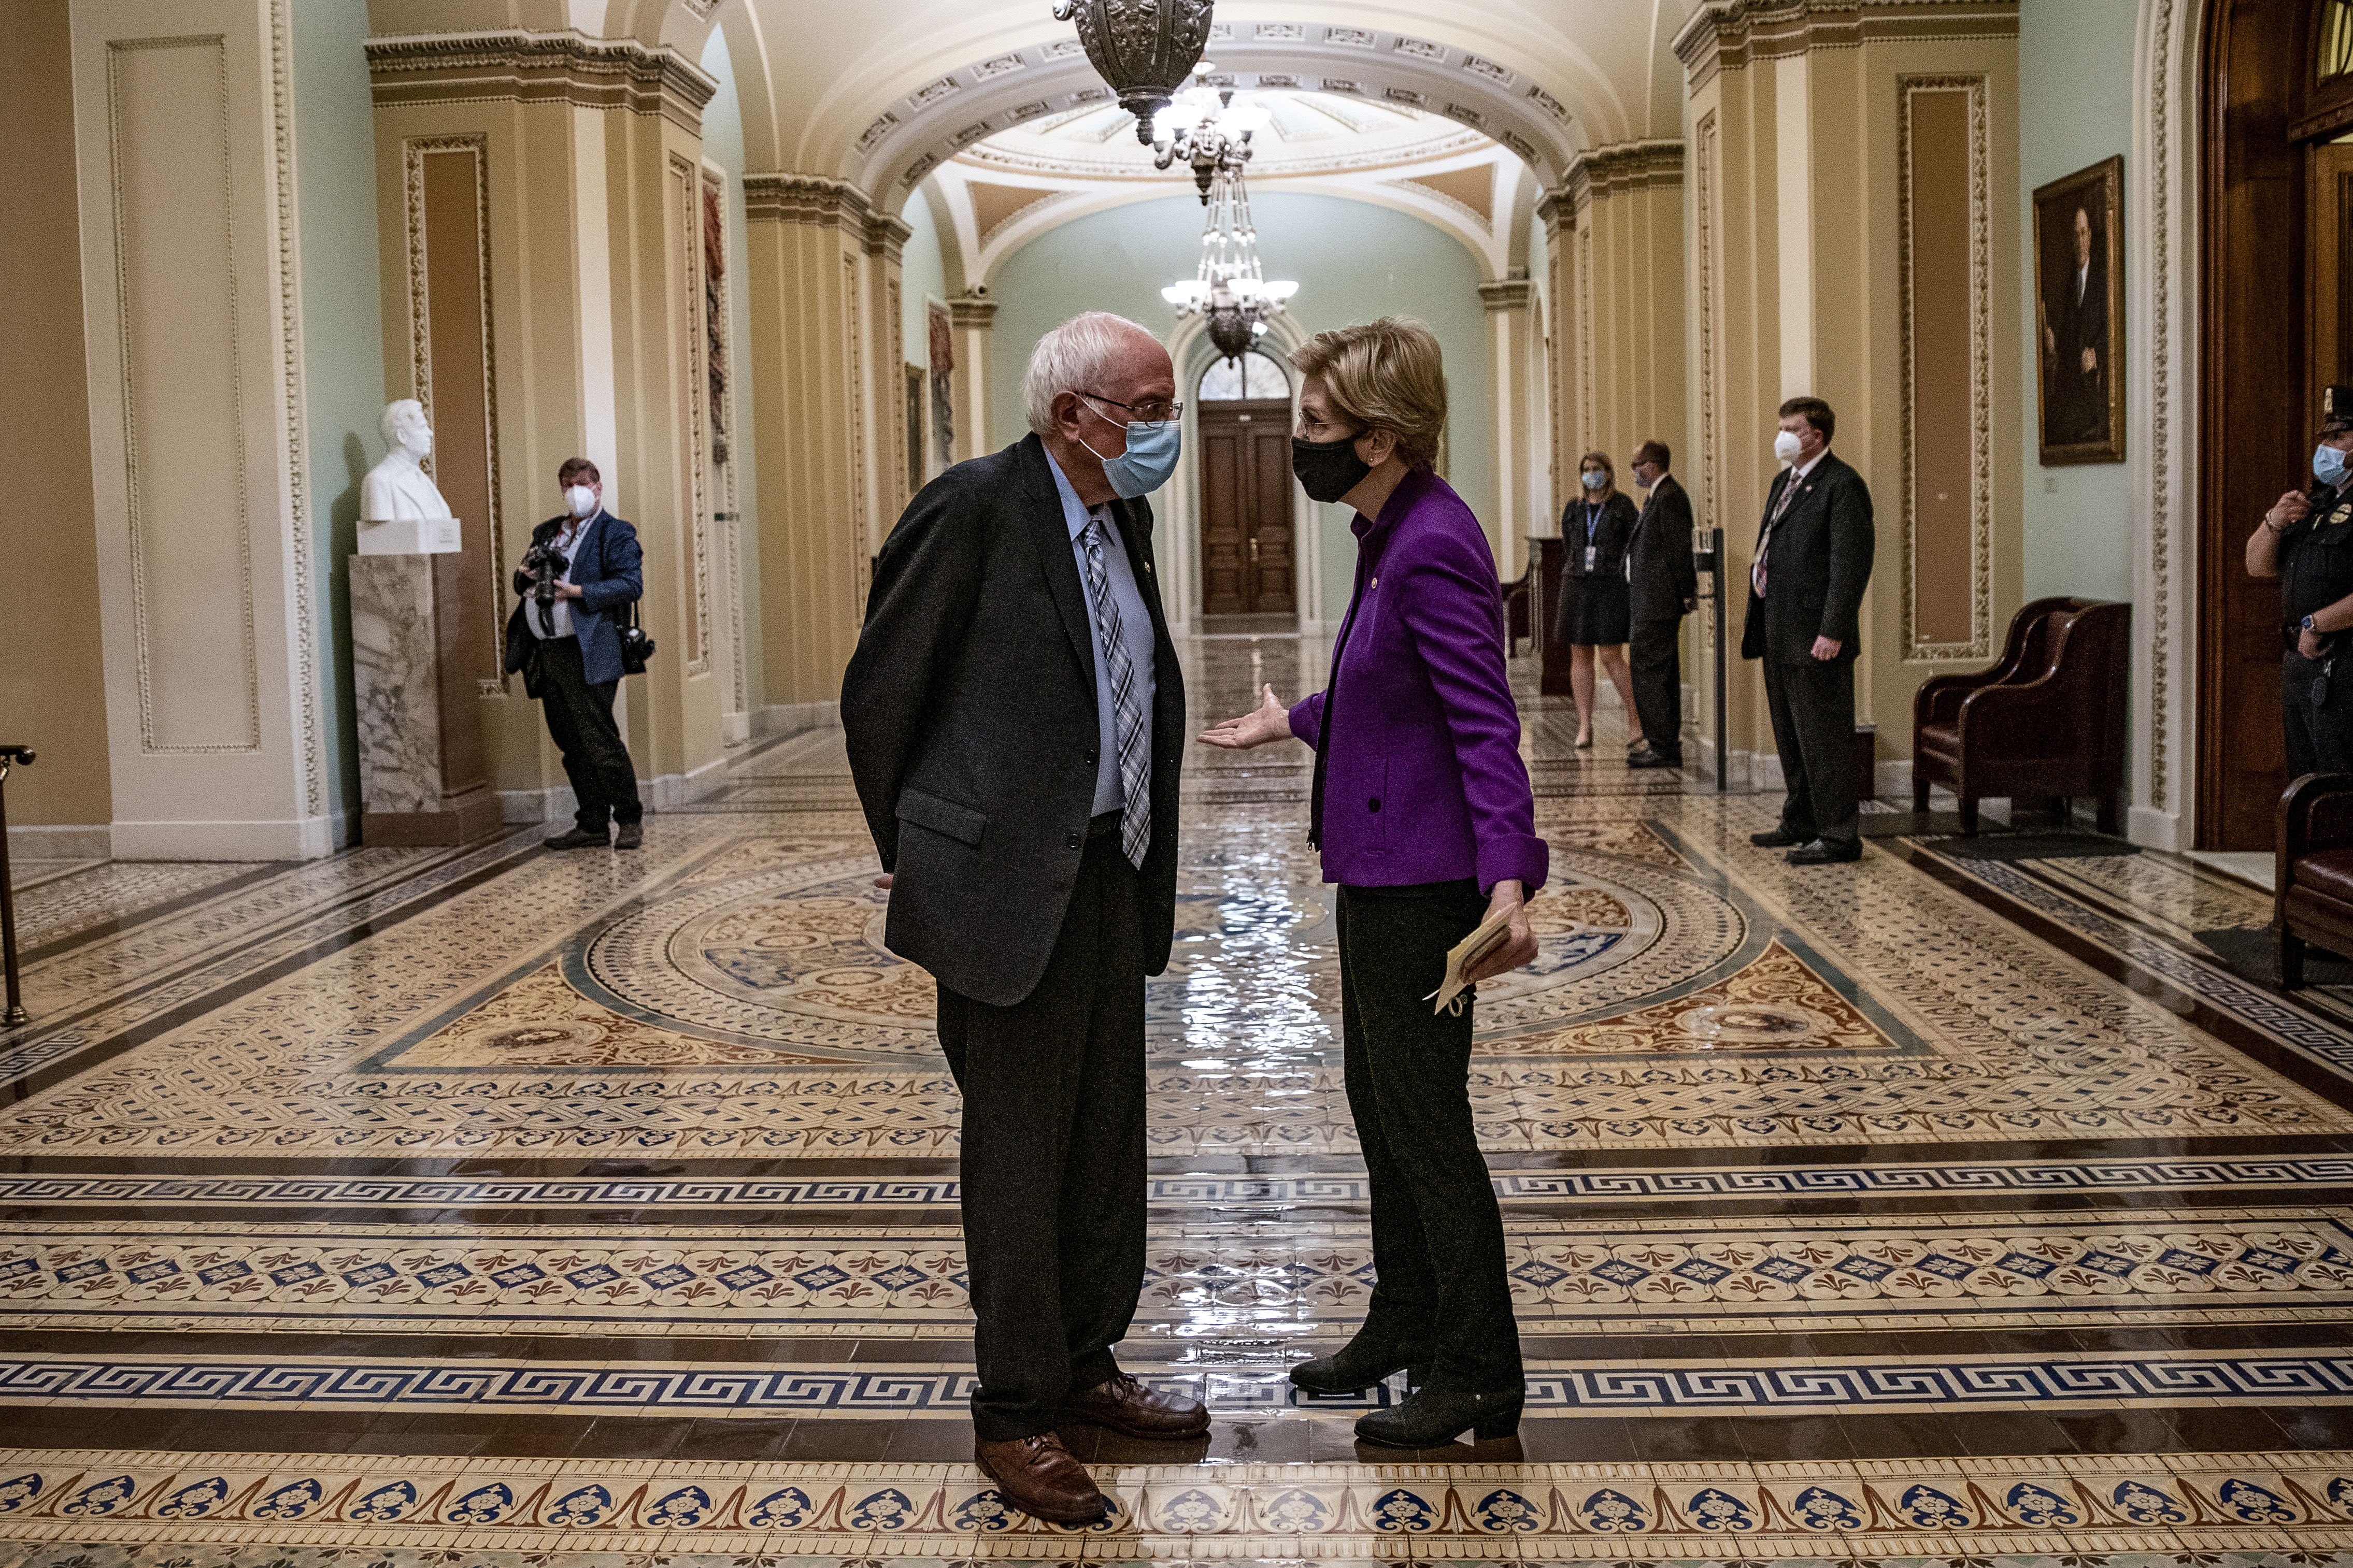  Sen. Bernie Sanders (I-VT) and Sen. Elizabeth Warren (D-MA) chat after U.S. President Joe Biden spoke at a joint session of Congress